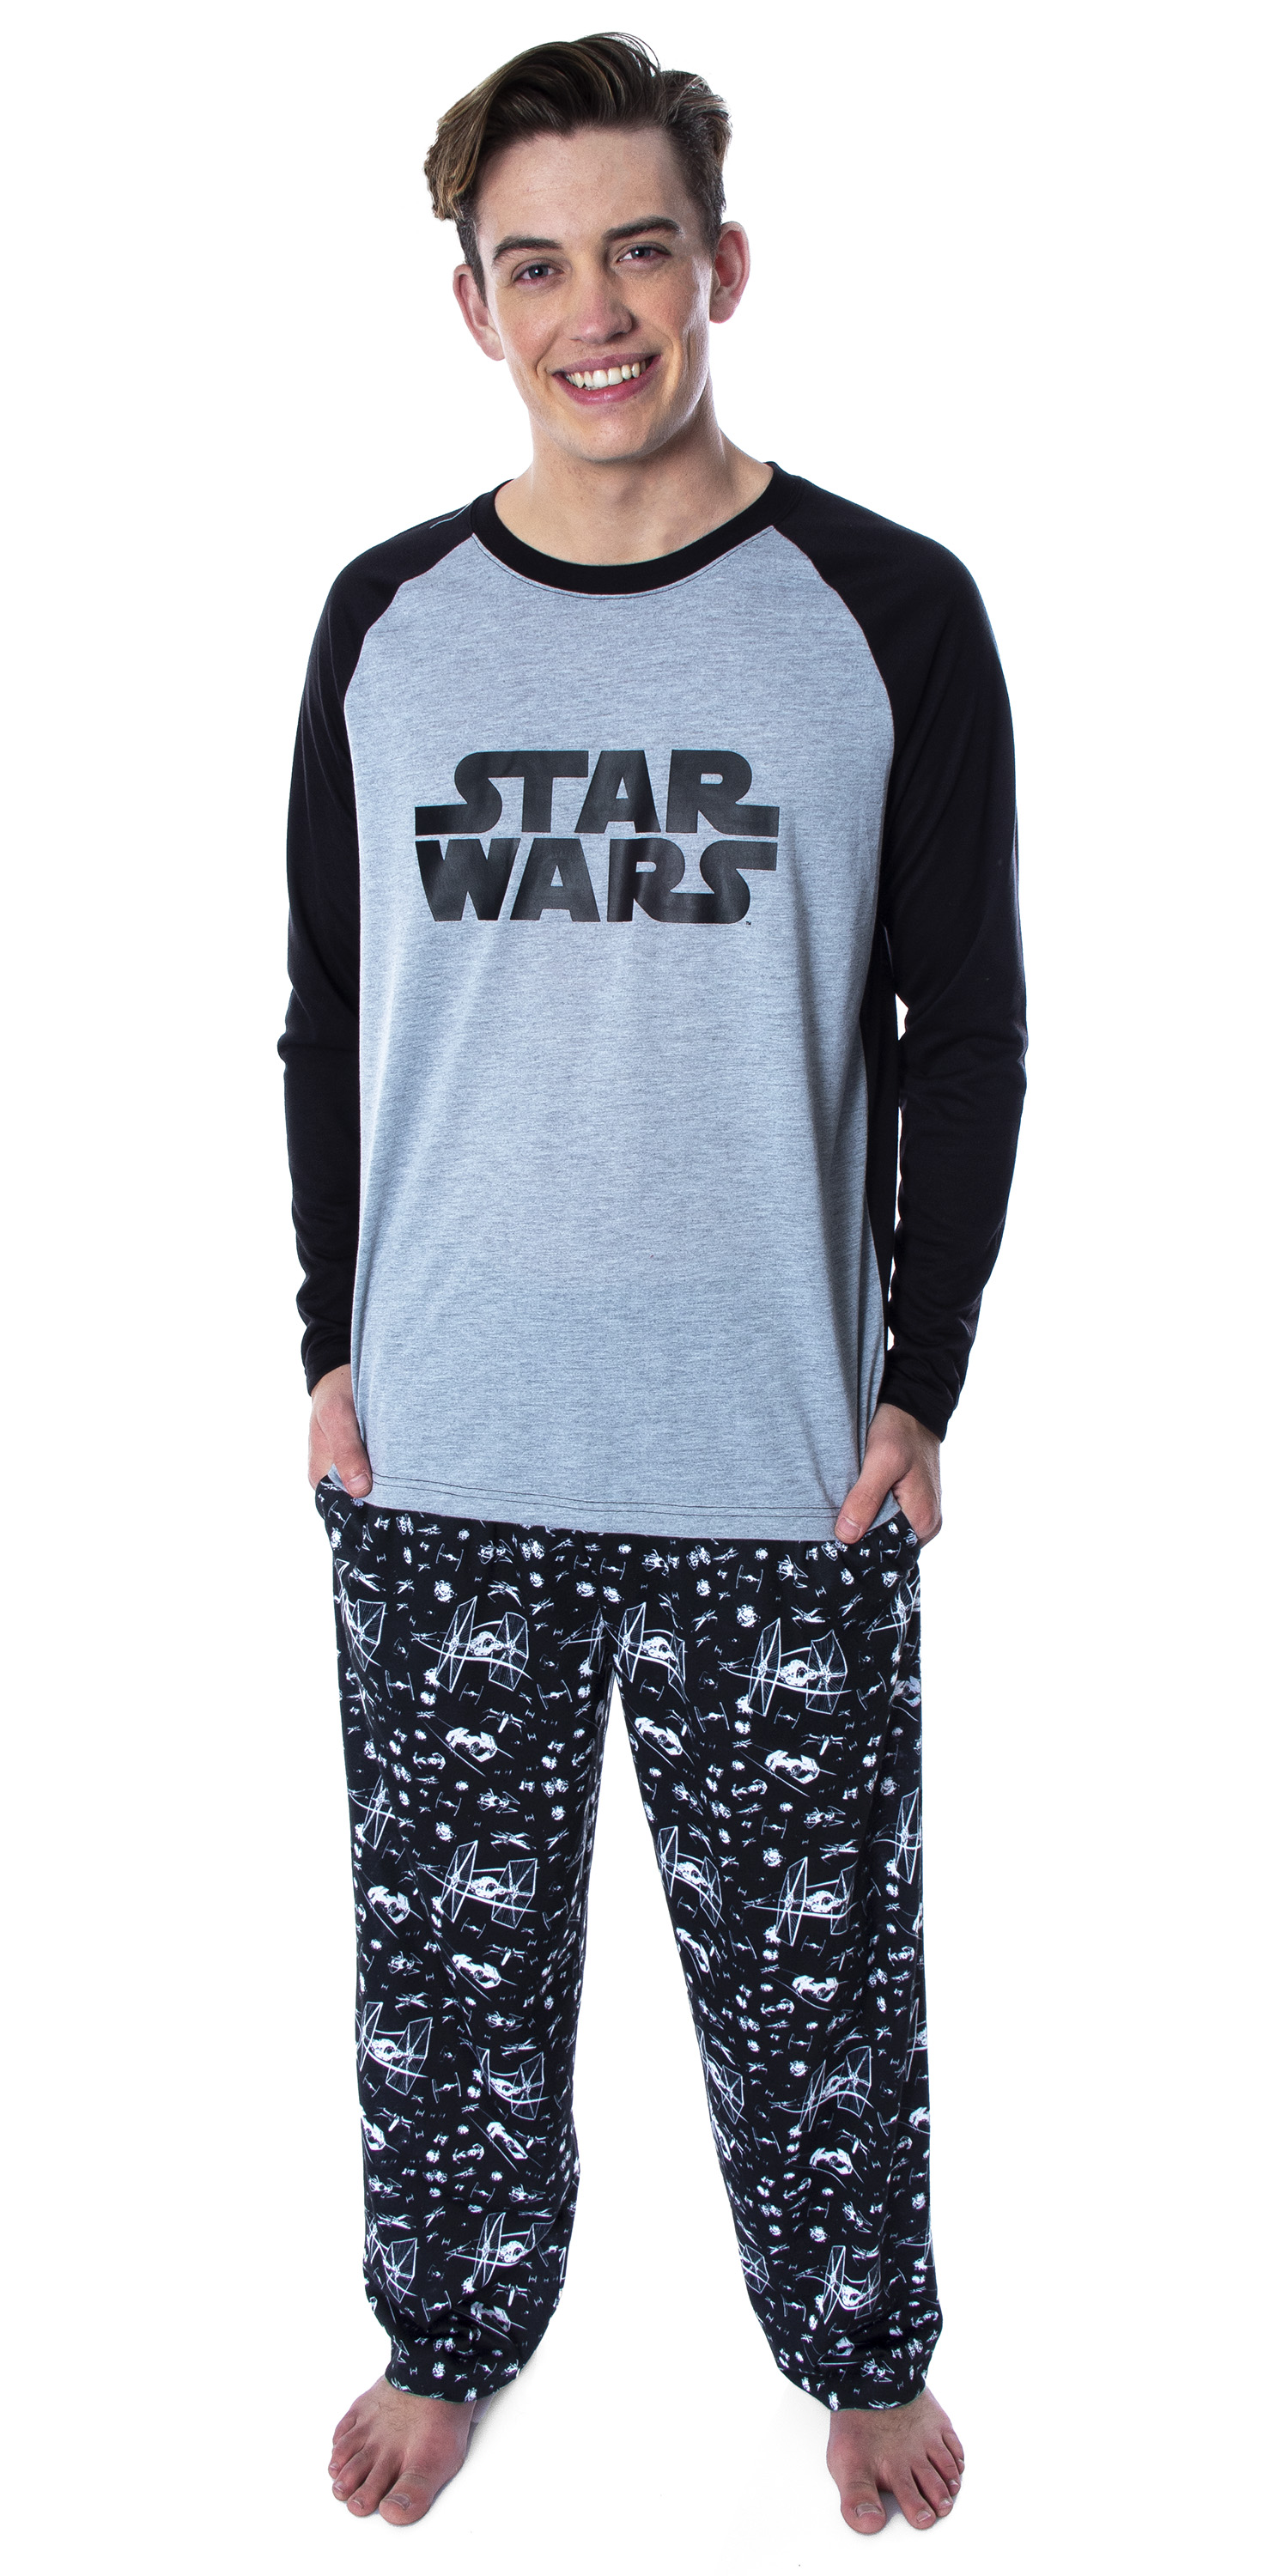 Intimo Star Wars Men's Pajamas Classic Logo Raglan Shirt And Lounge Pants 2 PC Sleepwear Pajama Set